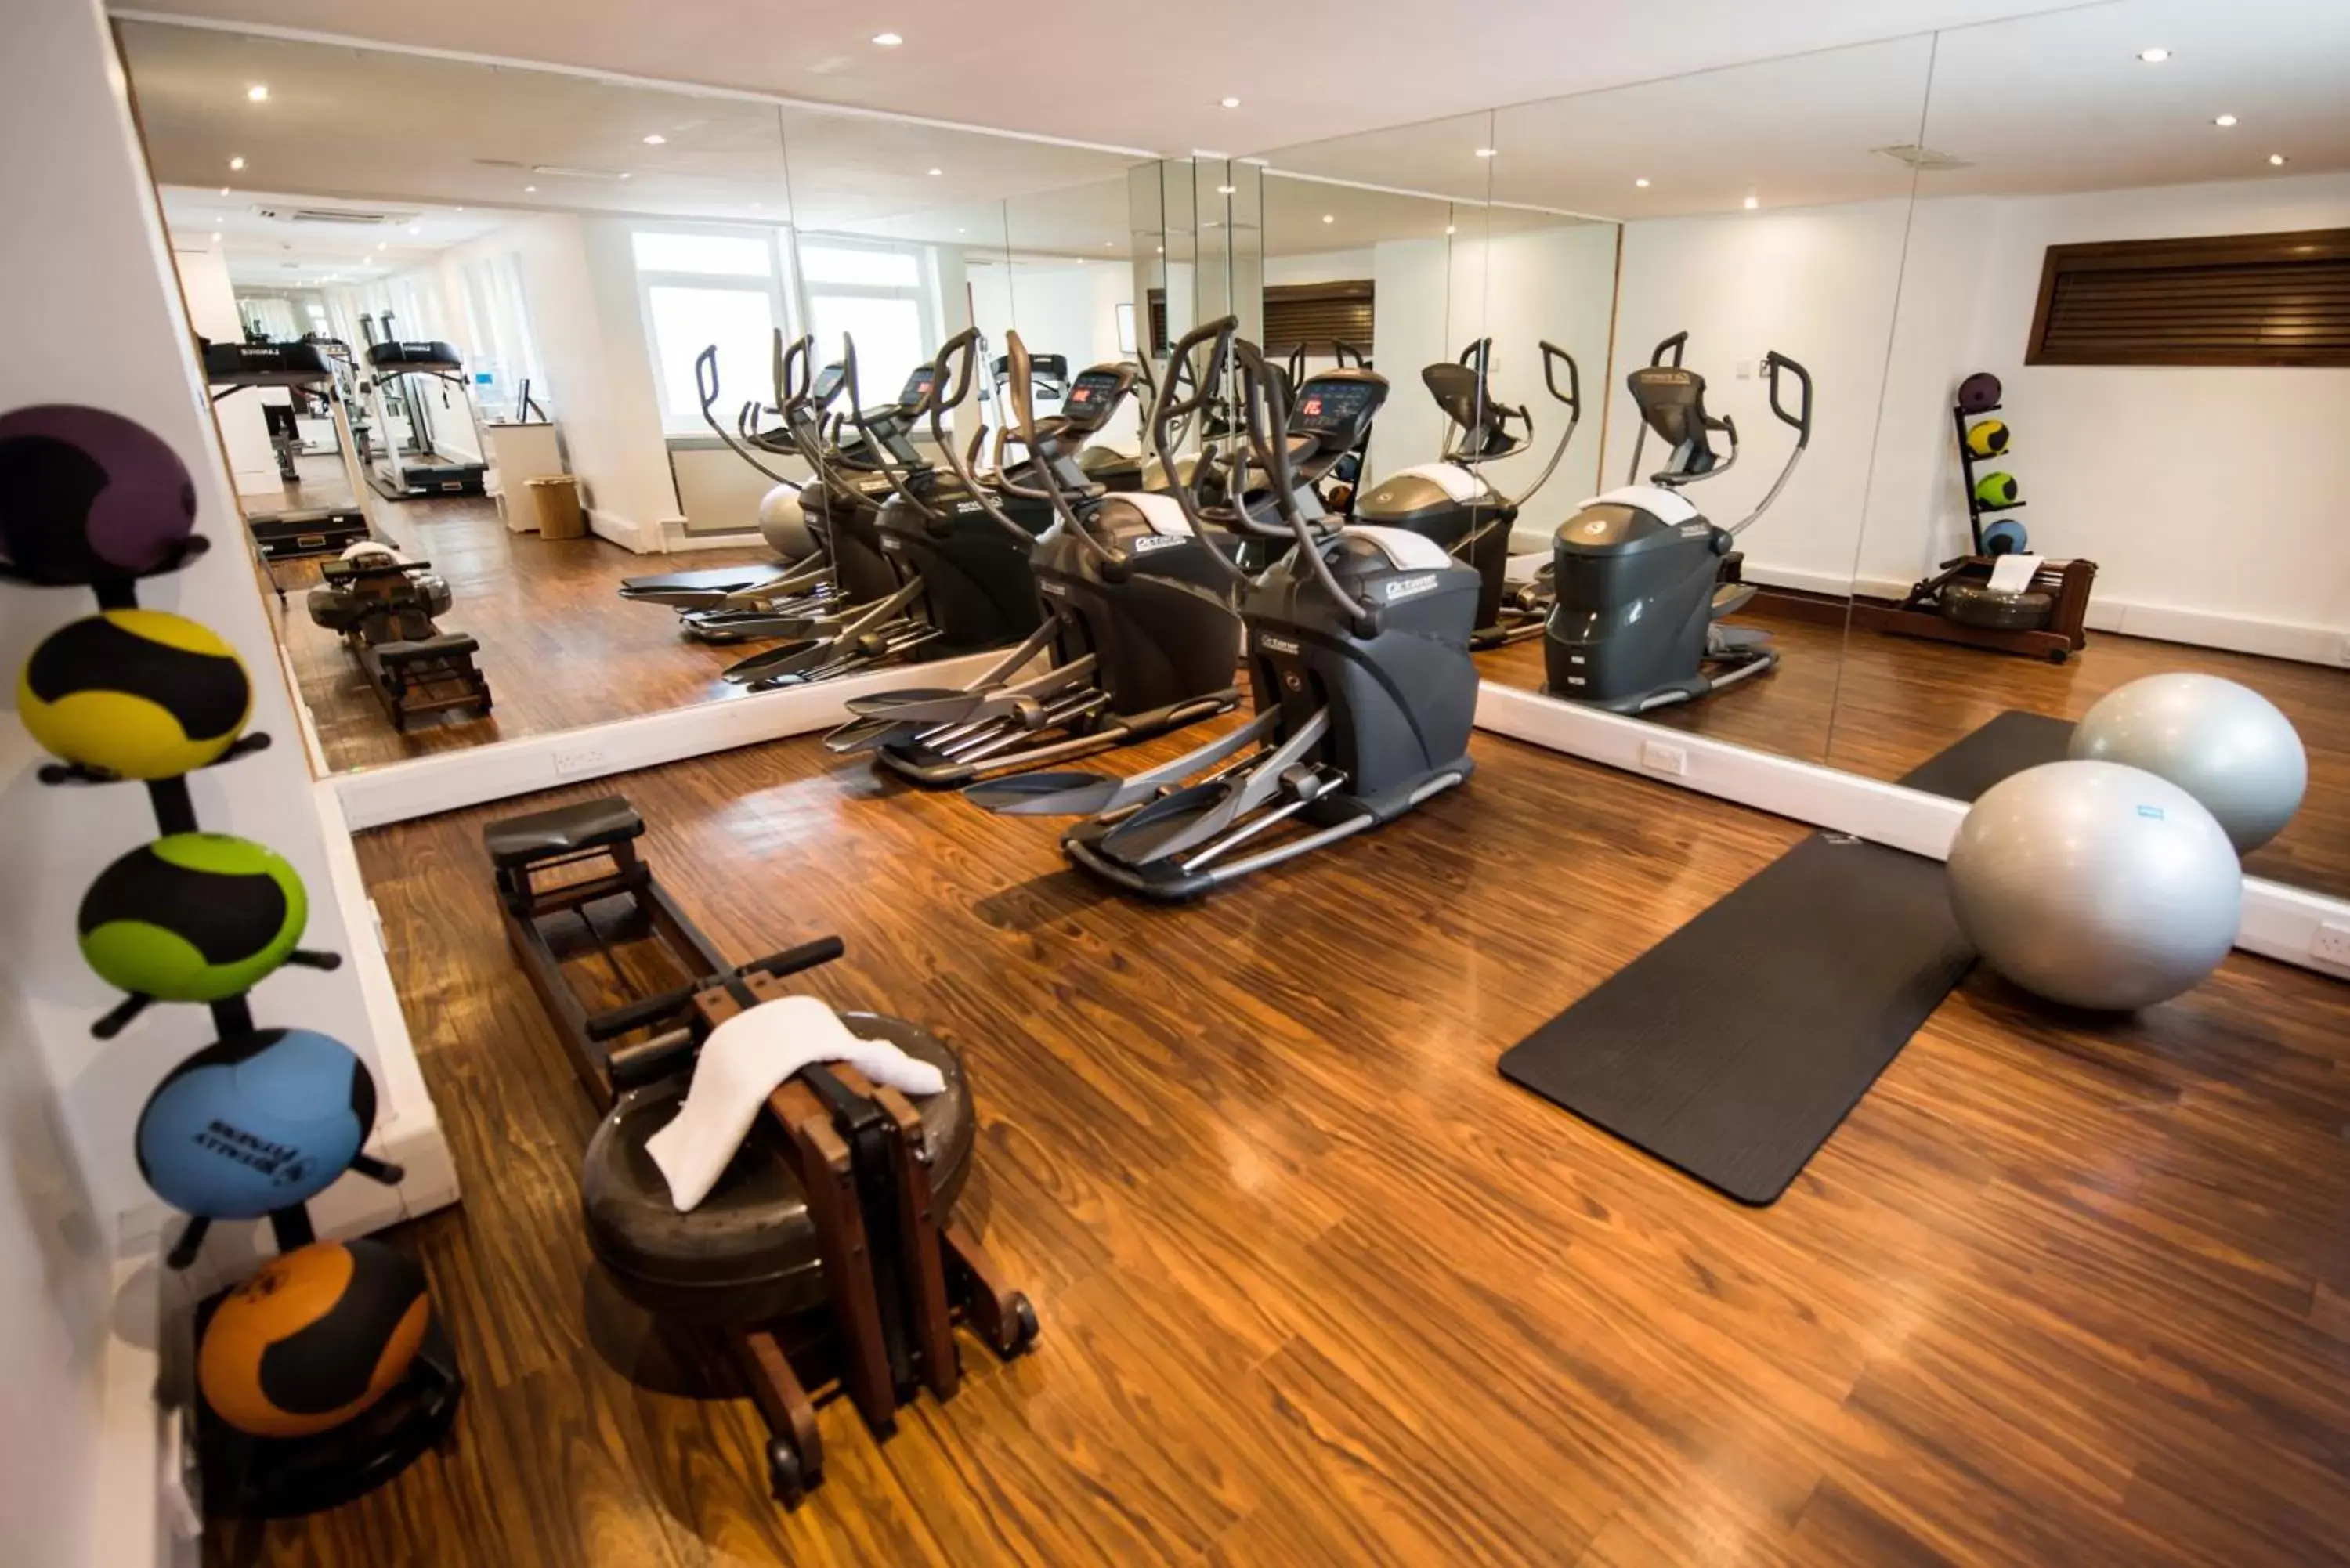 Fitness centre/facilities in The Bristol Hotel